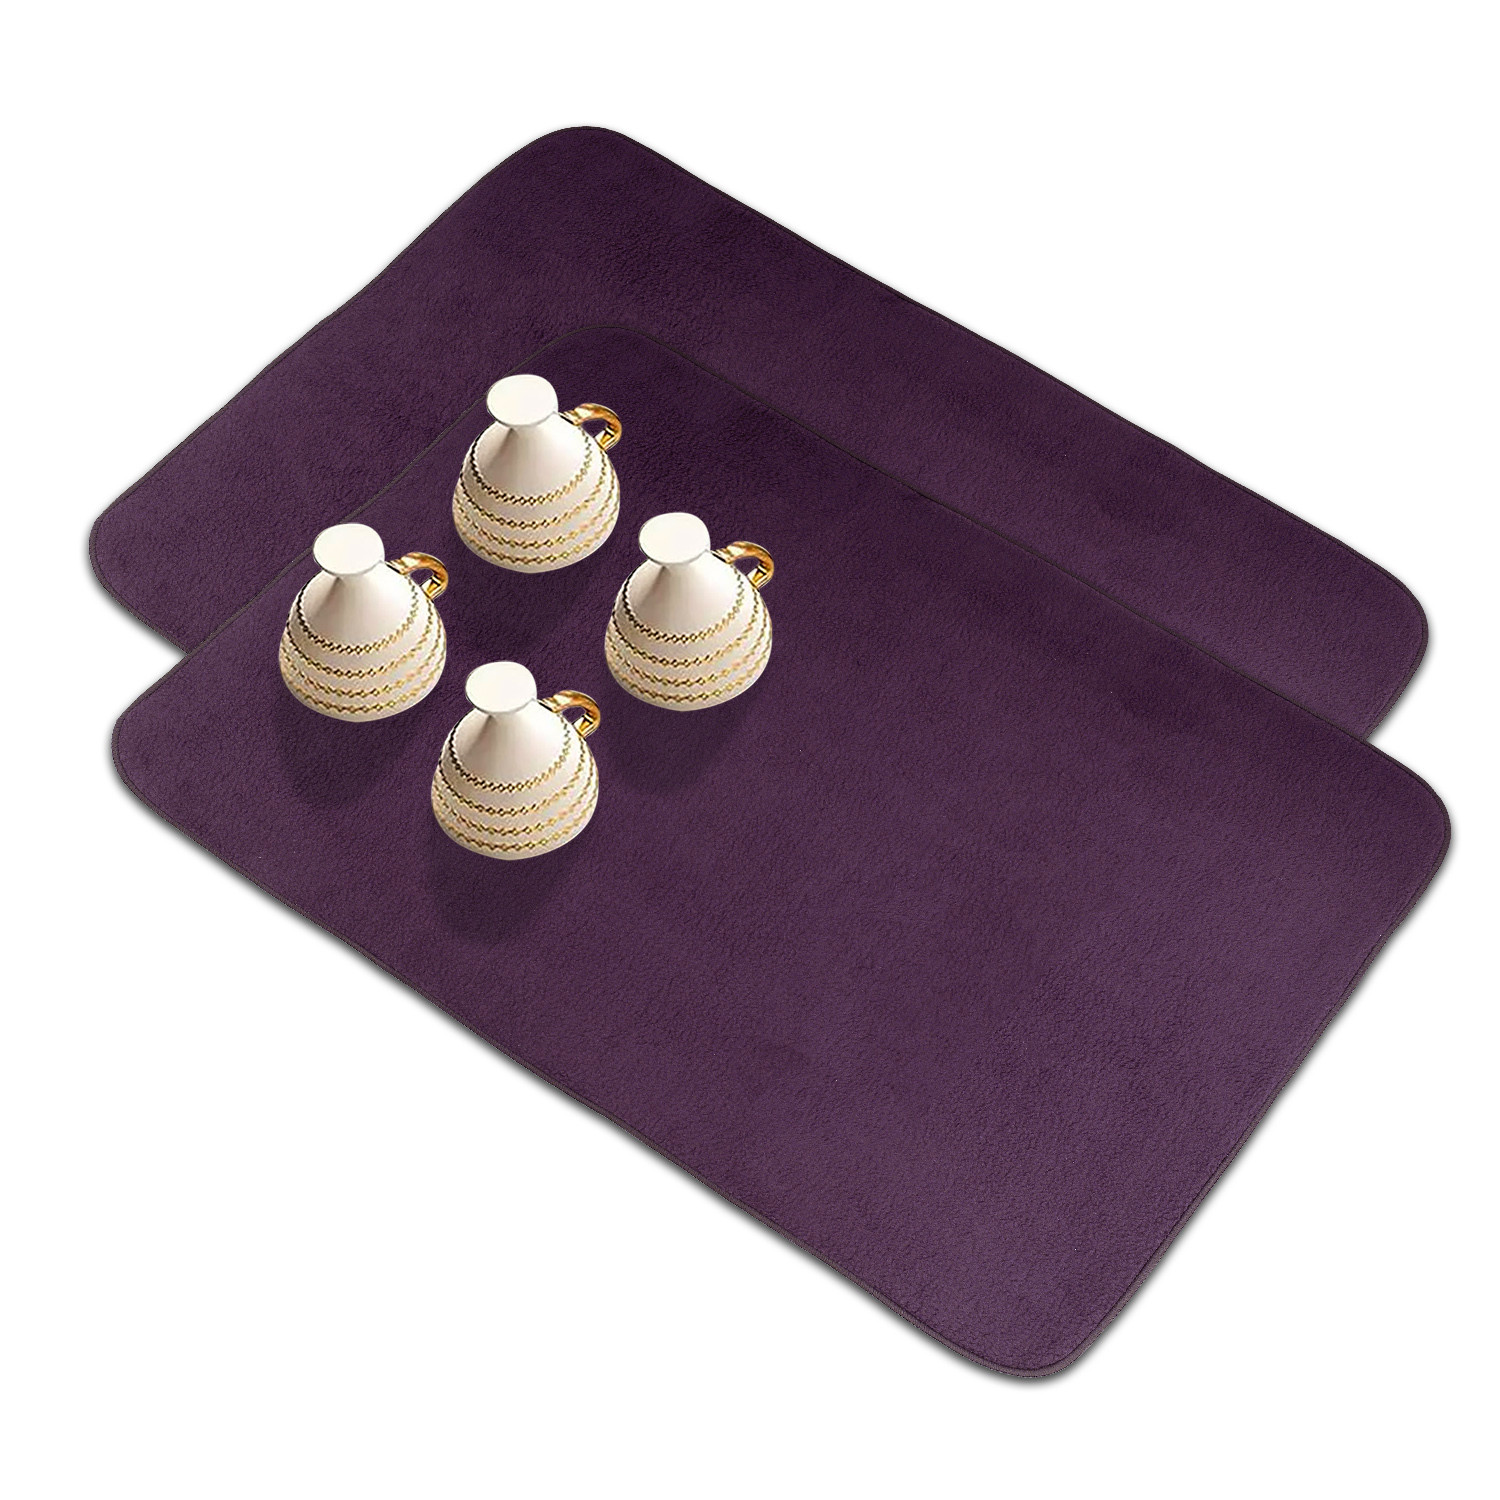 Kuber Industries Dish Dry Mat | Microfiber Drying Mat | Kitchen Drying Mat | Reversible Mat | Kitchen Absorbent Mat | Dish Dry Mat for Kitchen | 50x70 | Dark Purple